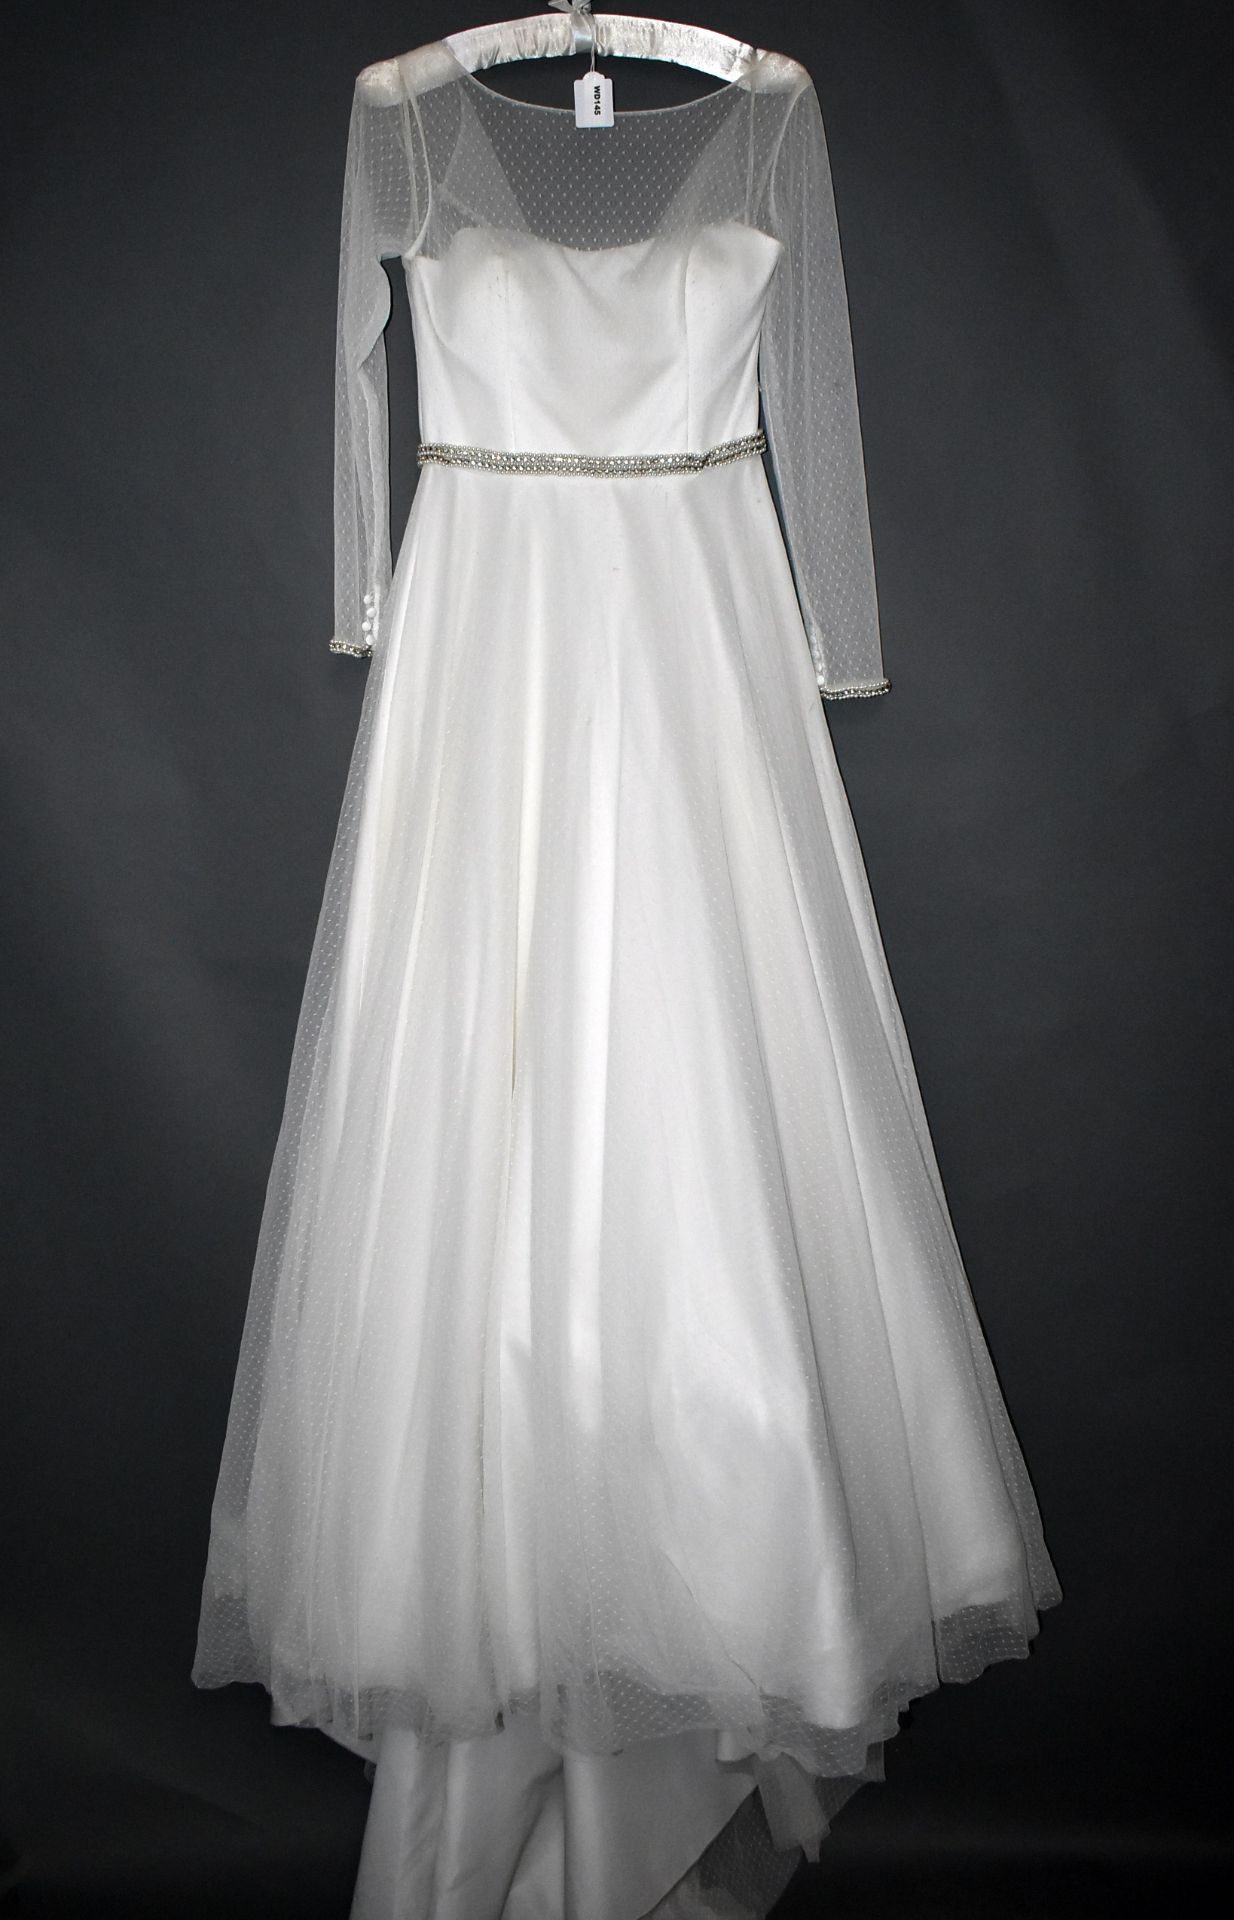 1 x WHITE ROSE Long Sleeved Satin And Chiffon Designer Wedding Dress Bridal Gown RRP £1,600 UK 12